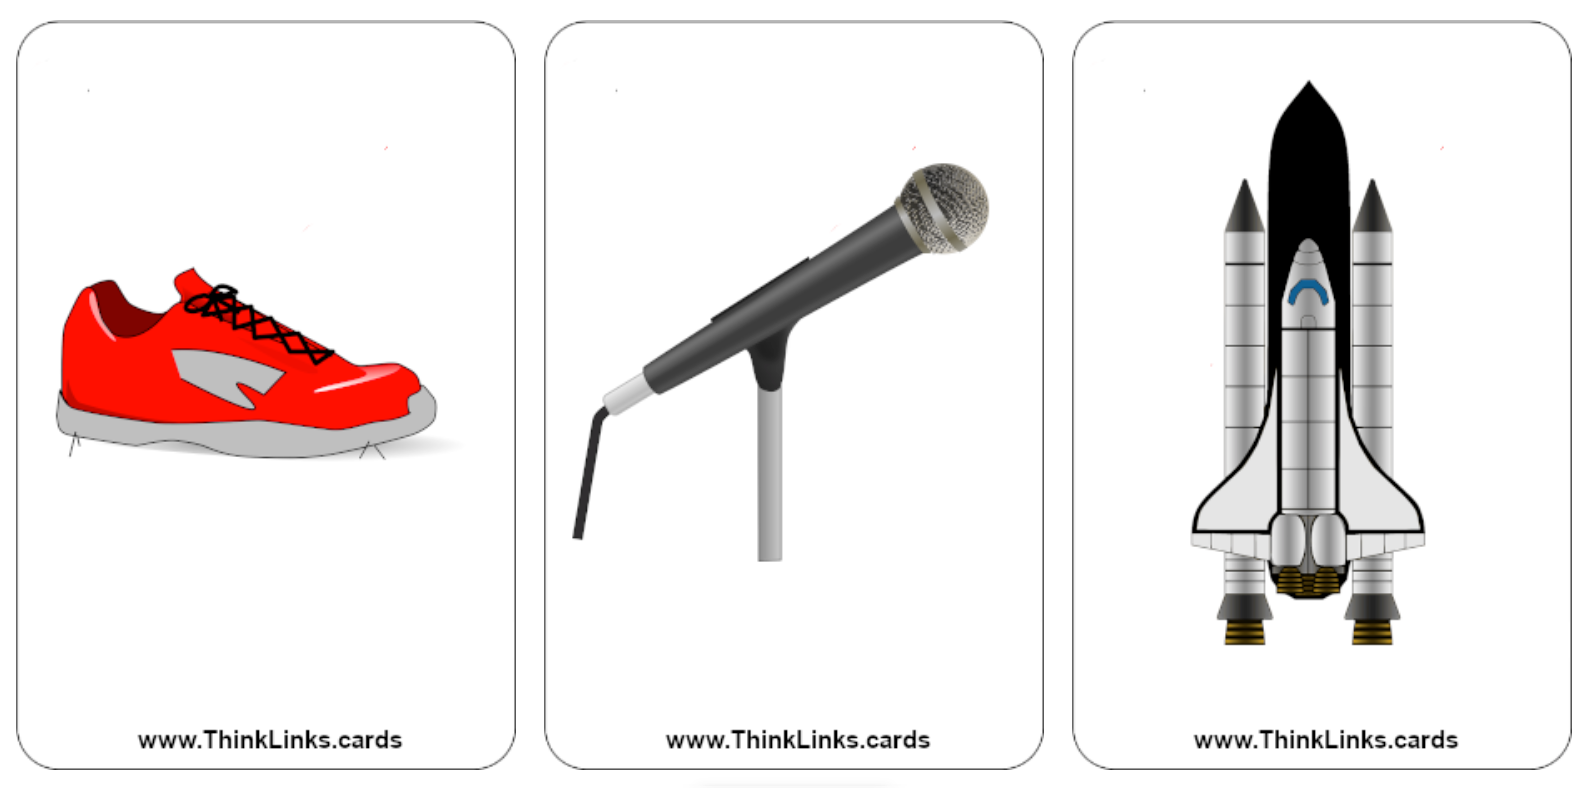 Think Links icebreaker game cards of a trainer, karaoeke mic, space shuttle